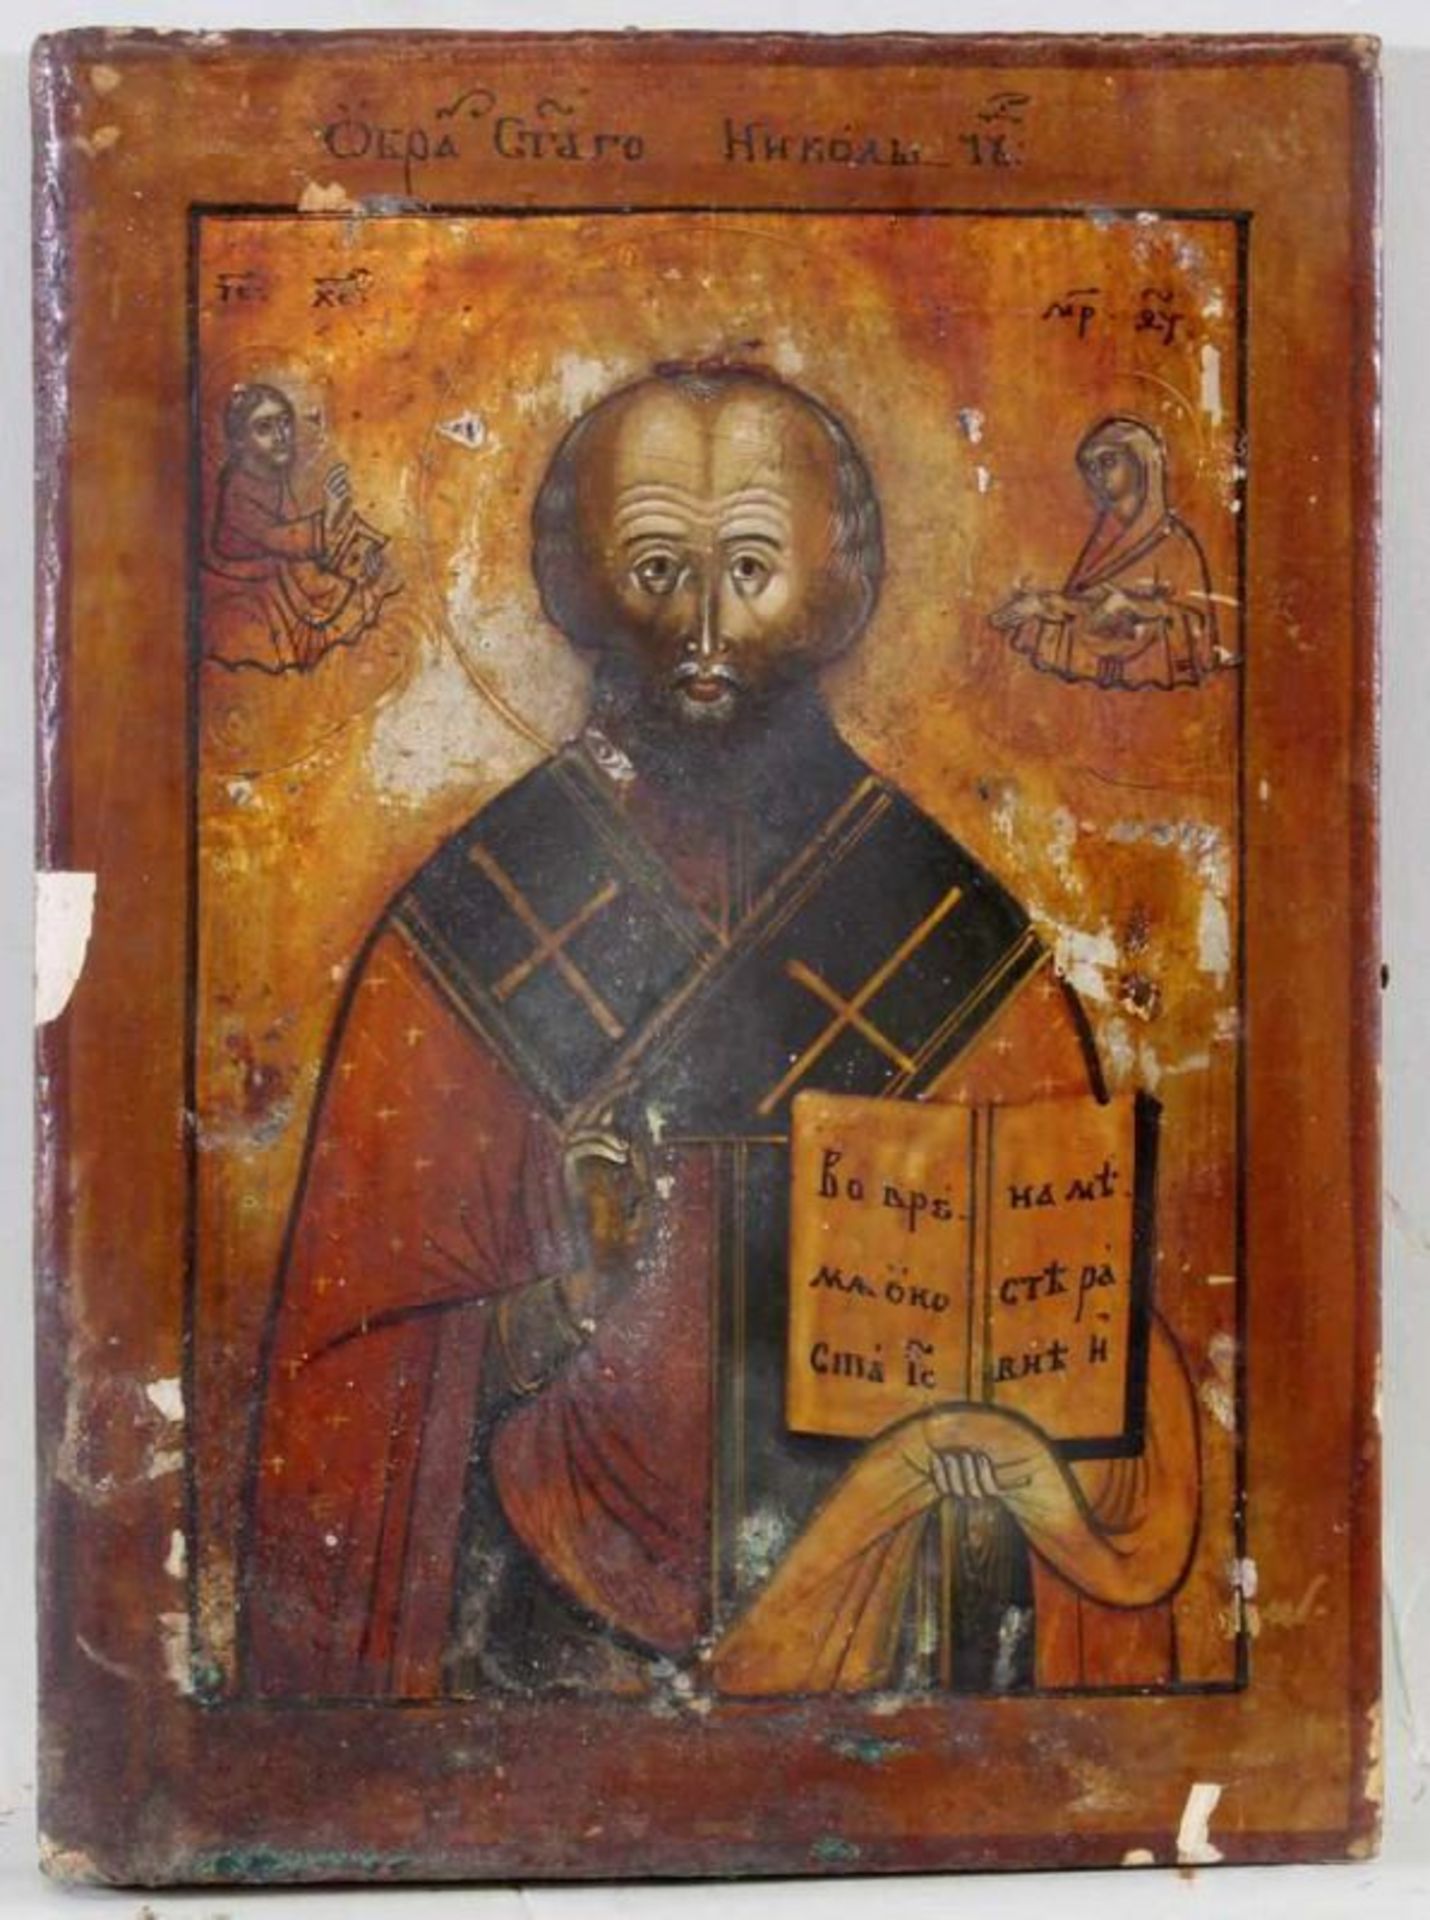 Ikone, Tempera auf Holz, "Hl. Nikolaus", Messingoklad, versilbert, Russland, 19. Jh., 17.5 x 13 cm - Image 3 of 6